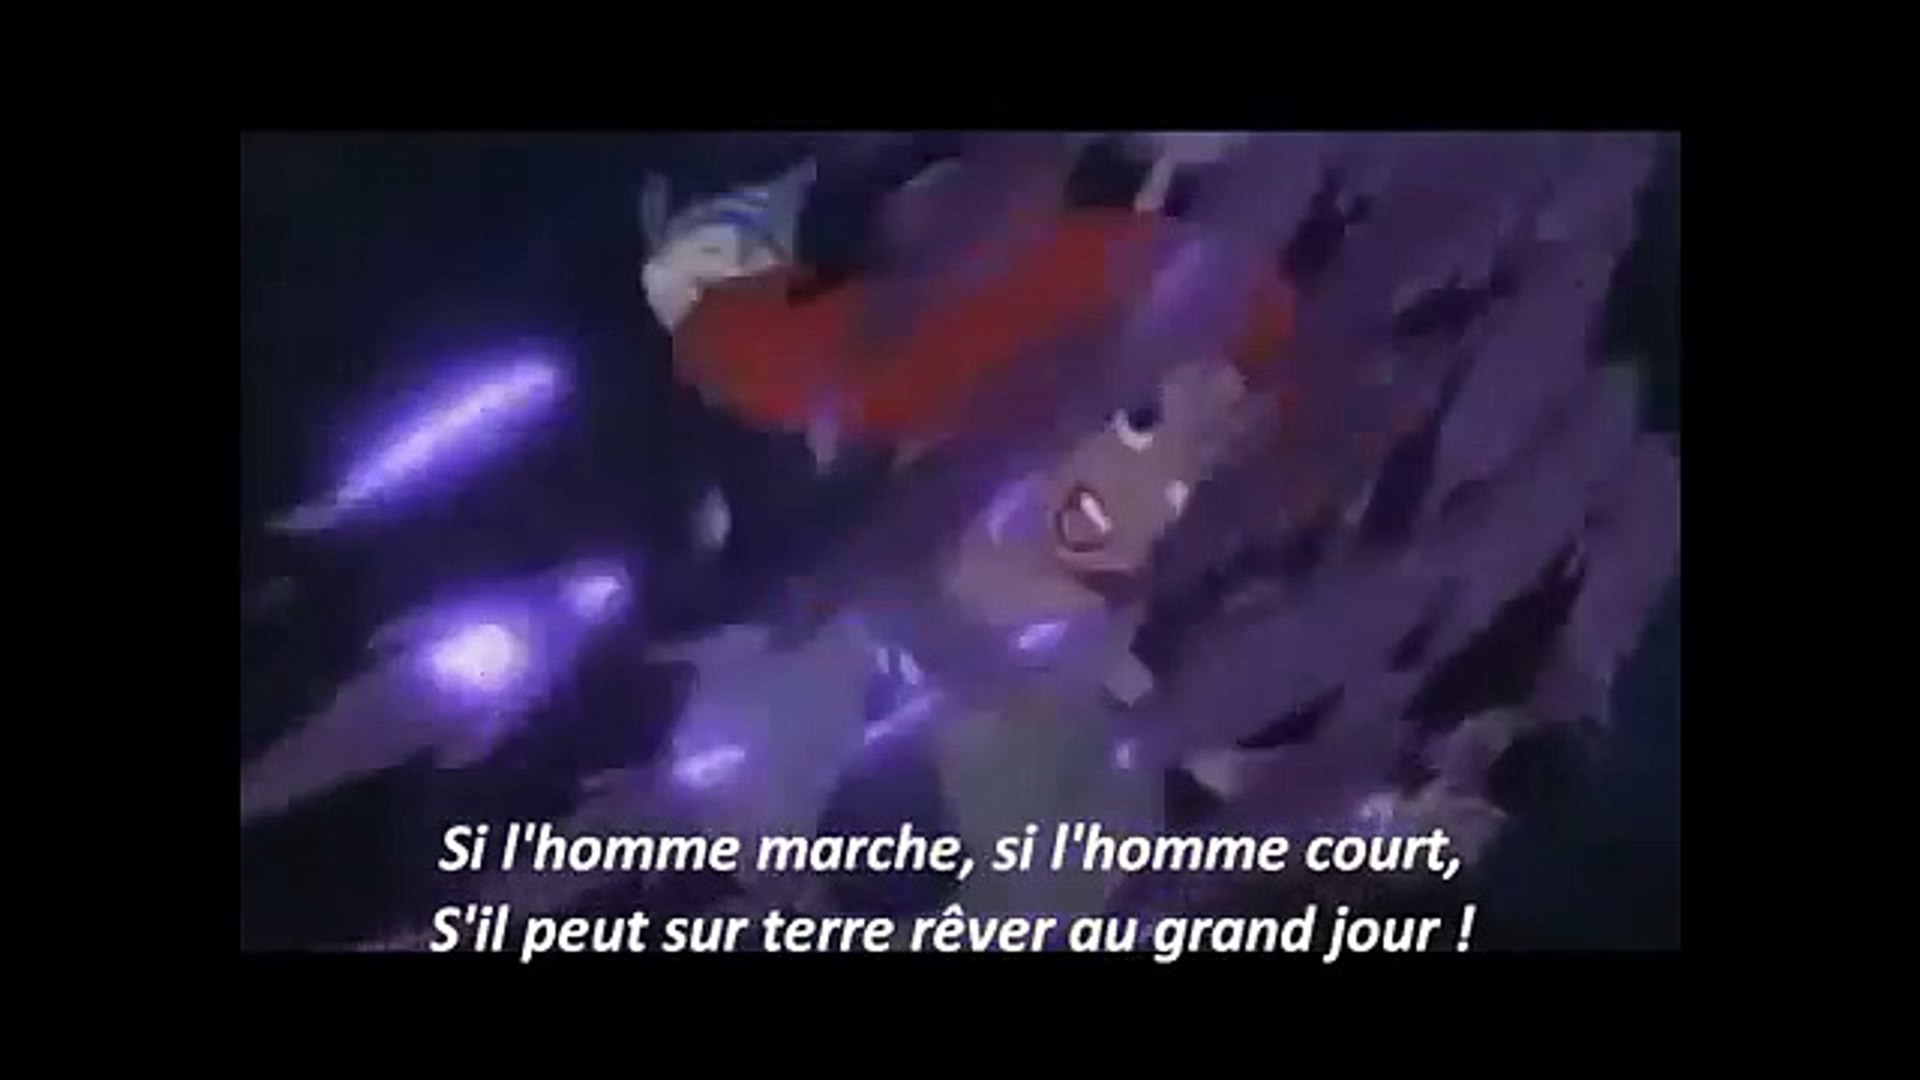 La Petite Sirène - Partir là bas - Paroles [HD] (fr) - Vidéo Dailymotion